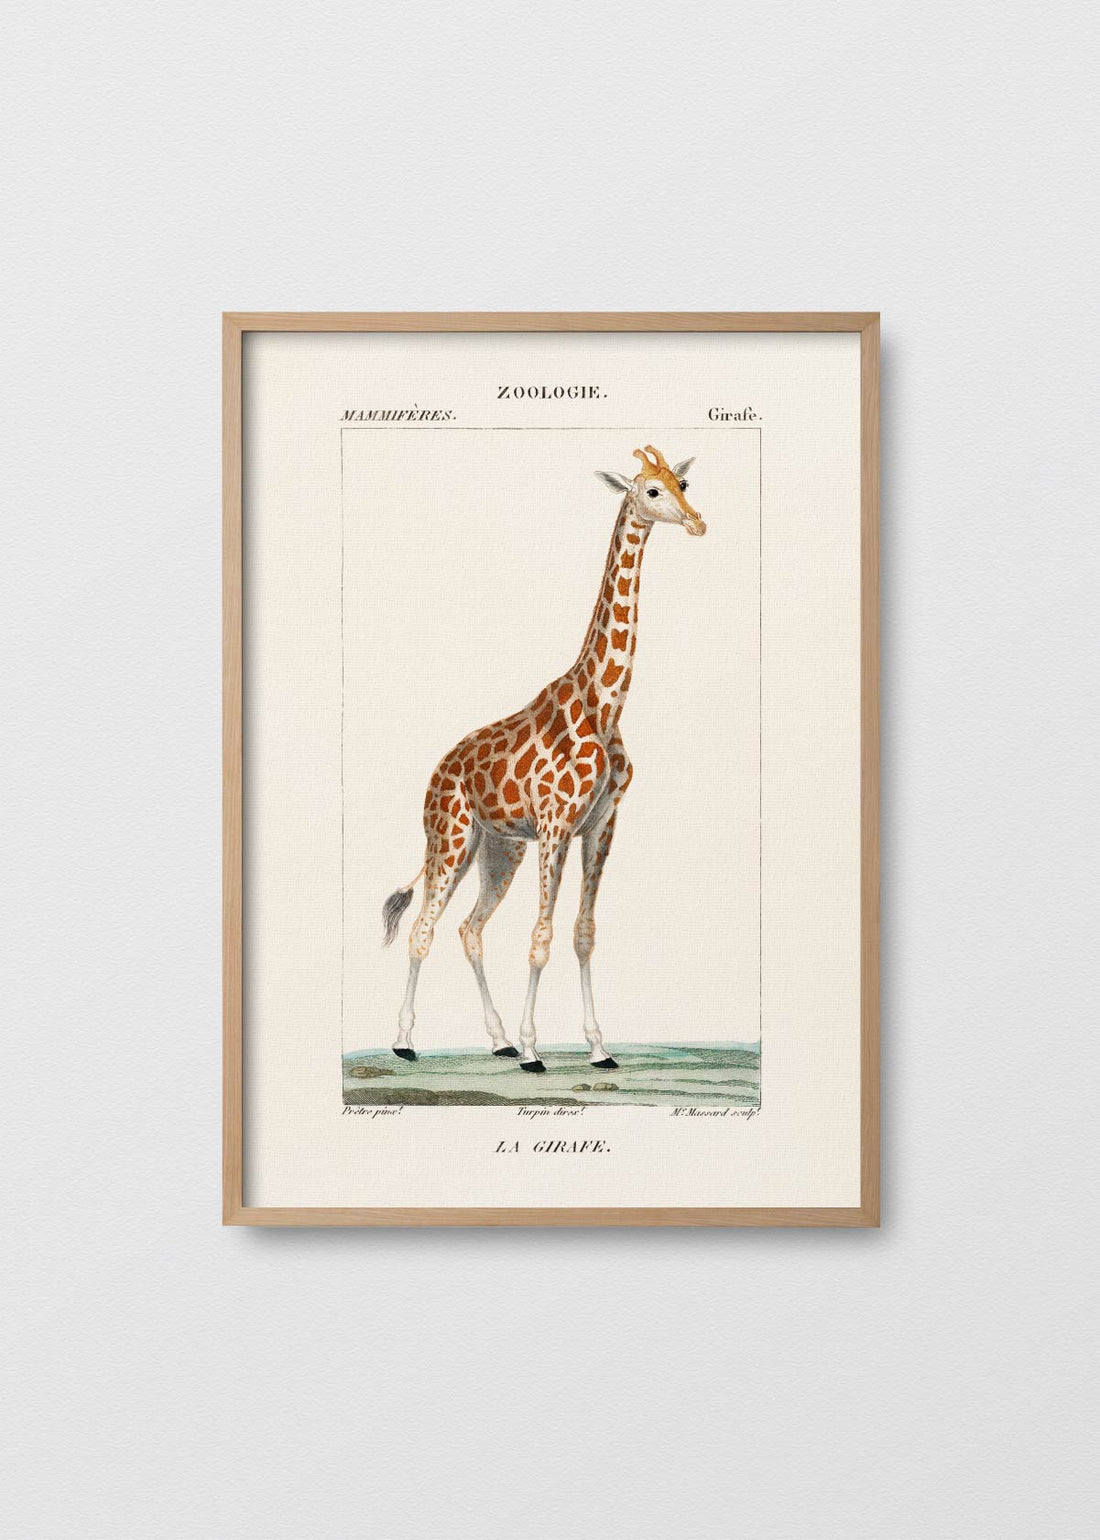 Giraffe - Testimoniaprints